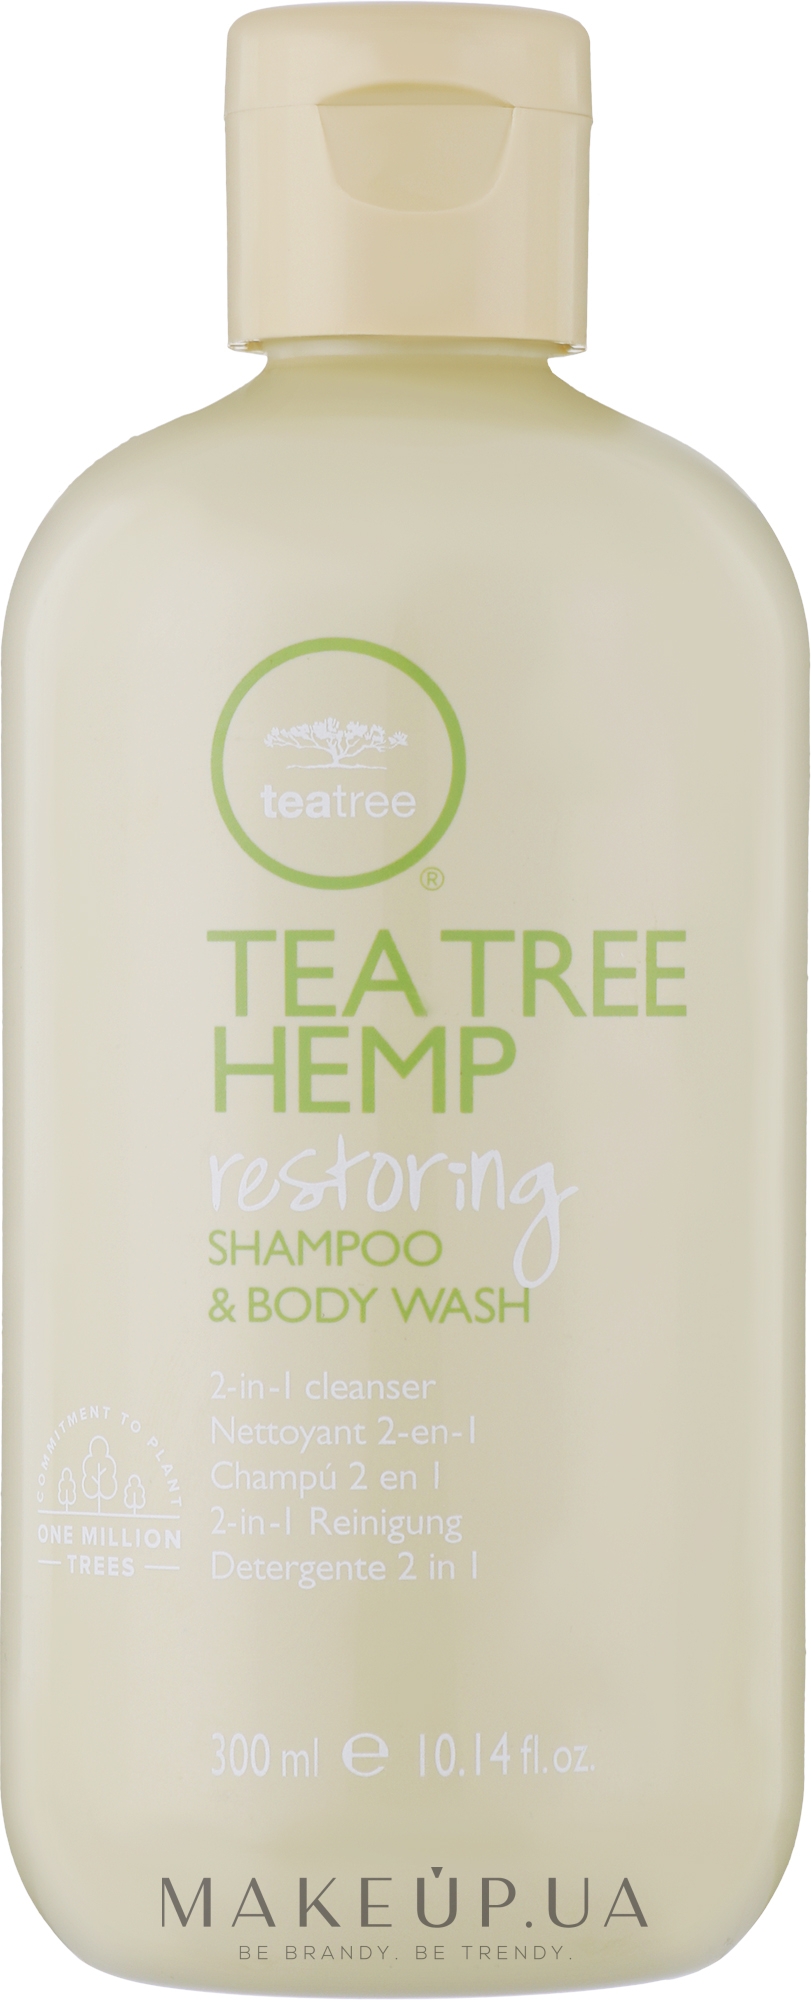 Восстанавливающий шампунь 2в1 - Paul Mitchell Tea Tree Hemp Restoring Shampoo & Body Wash — фото 300ml